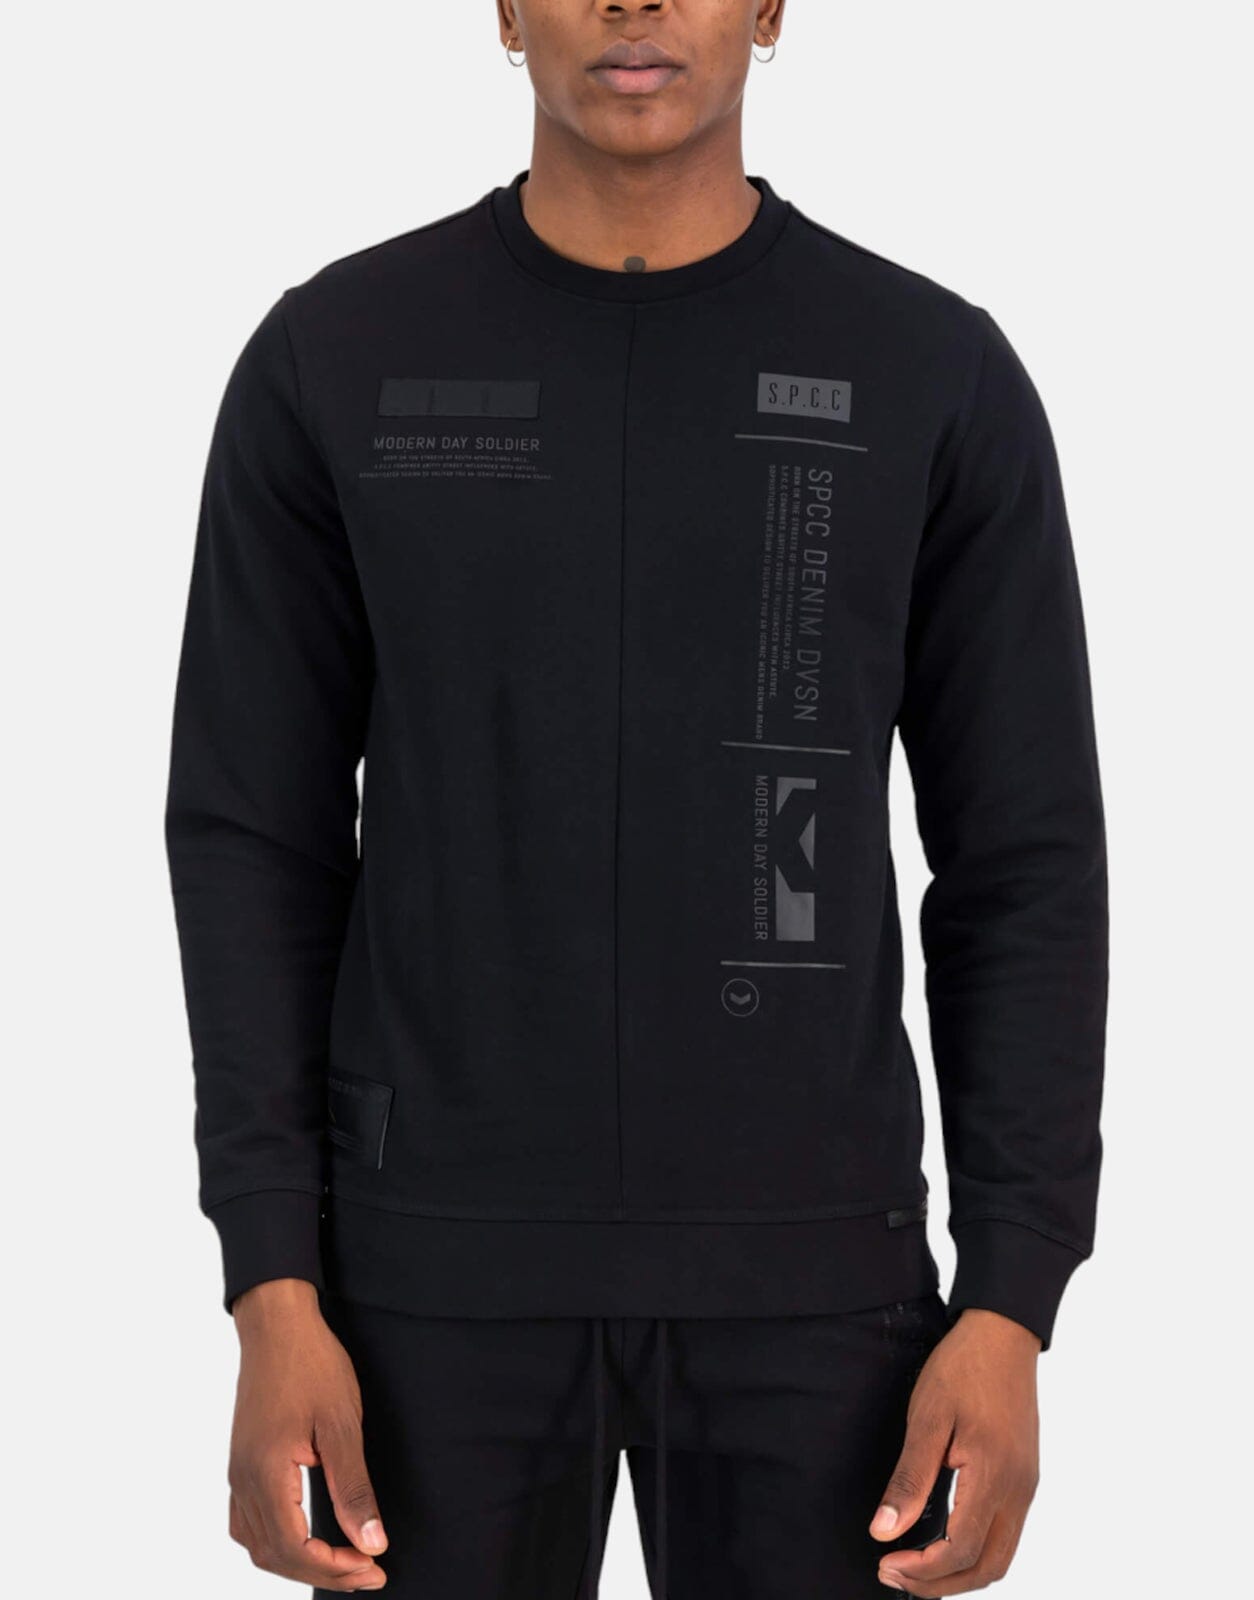 SPCC Varon Black Sweatshirt - Subwear